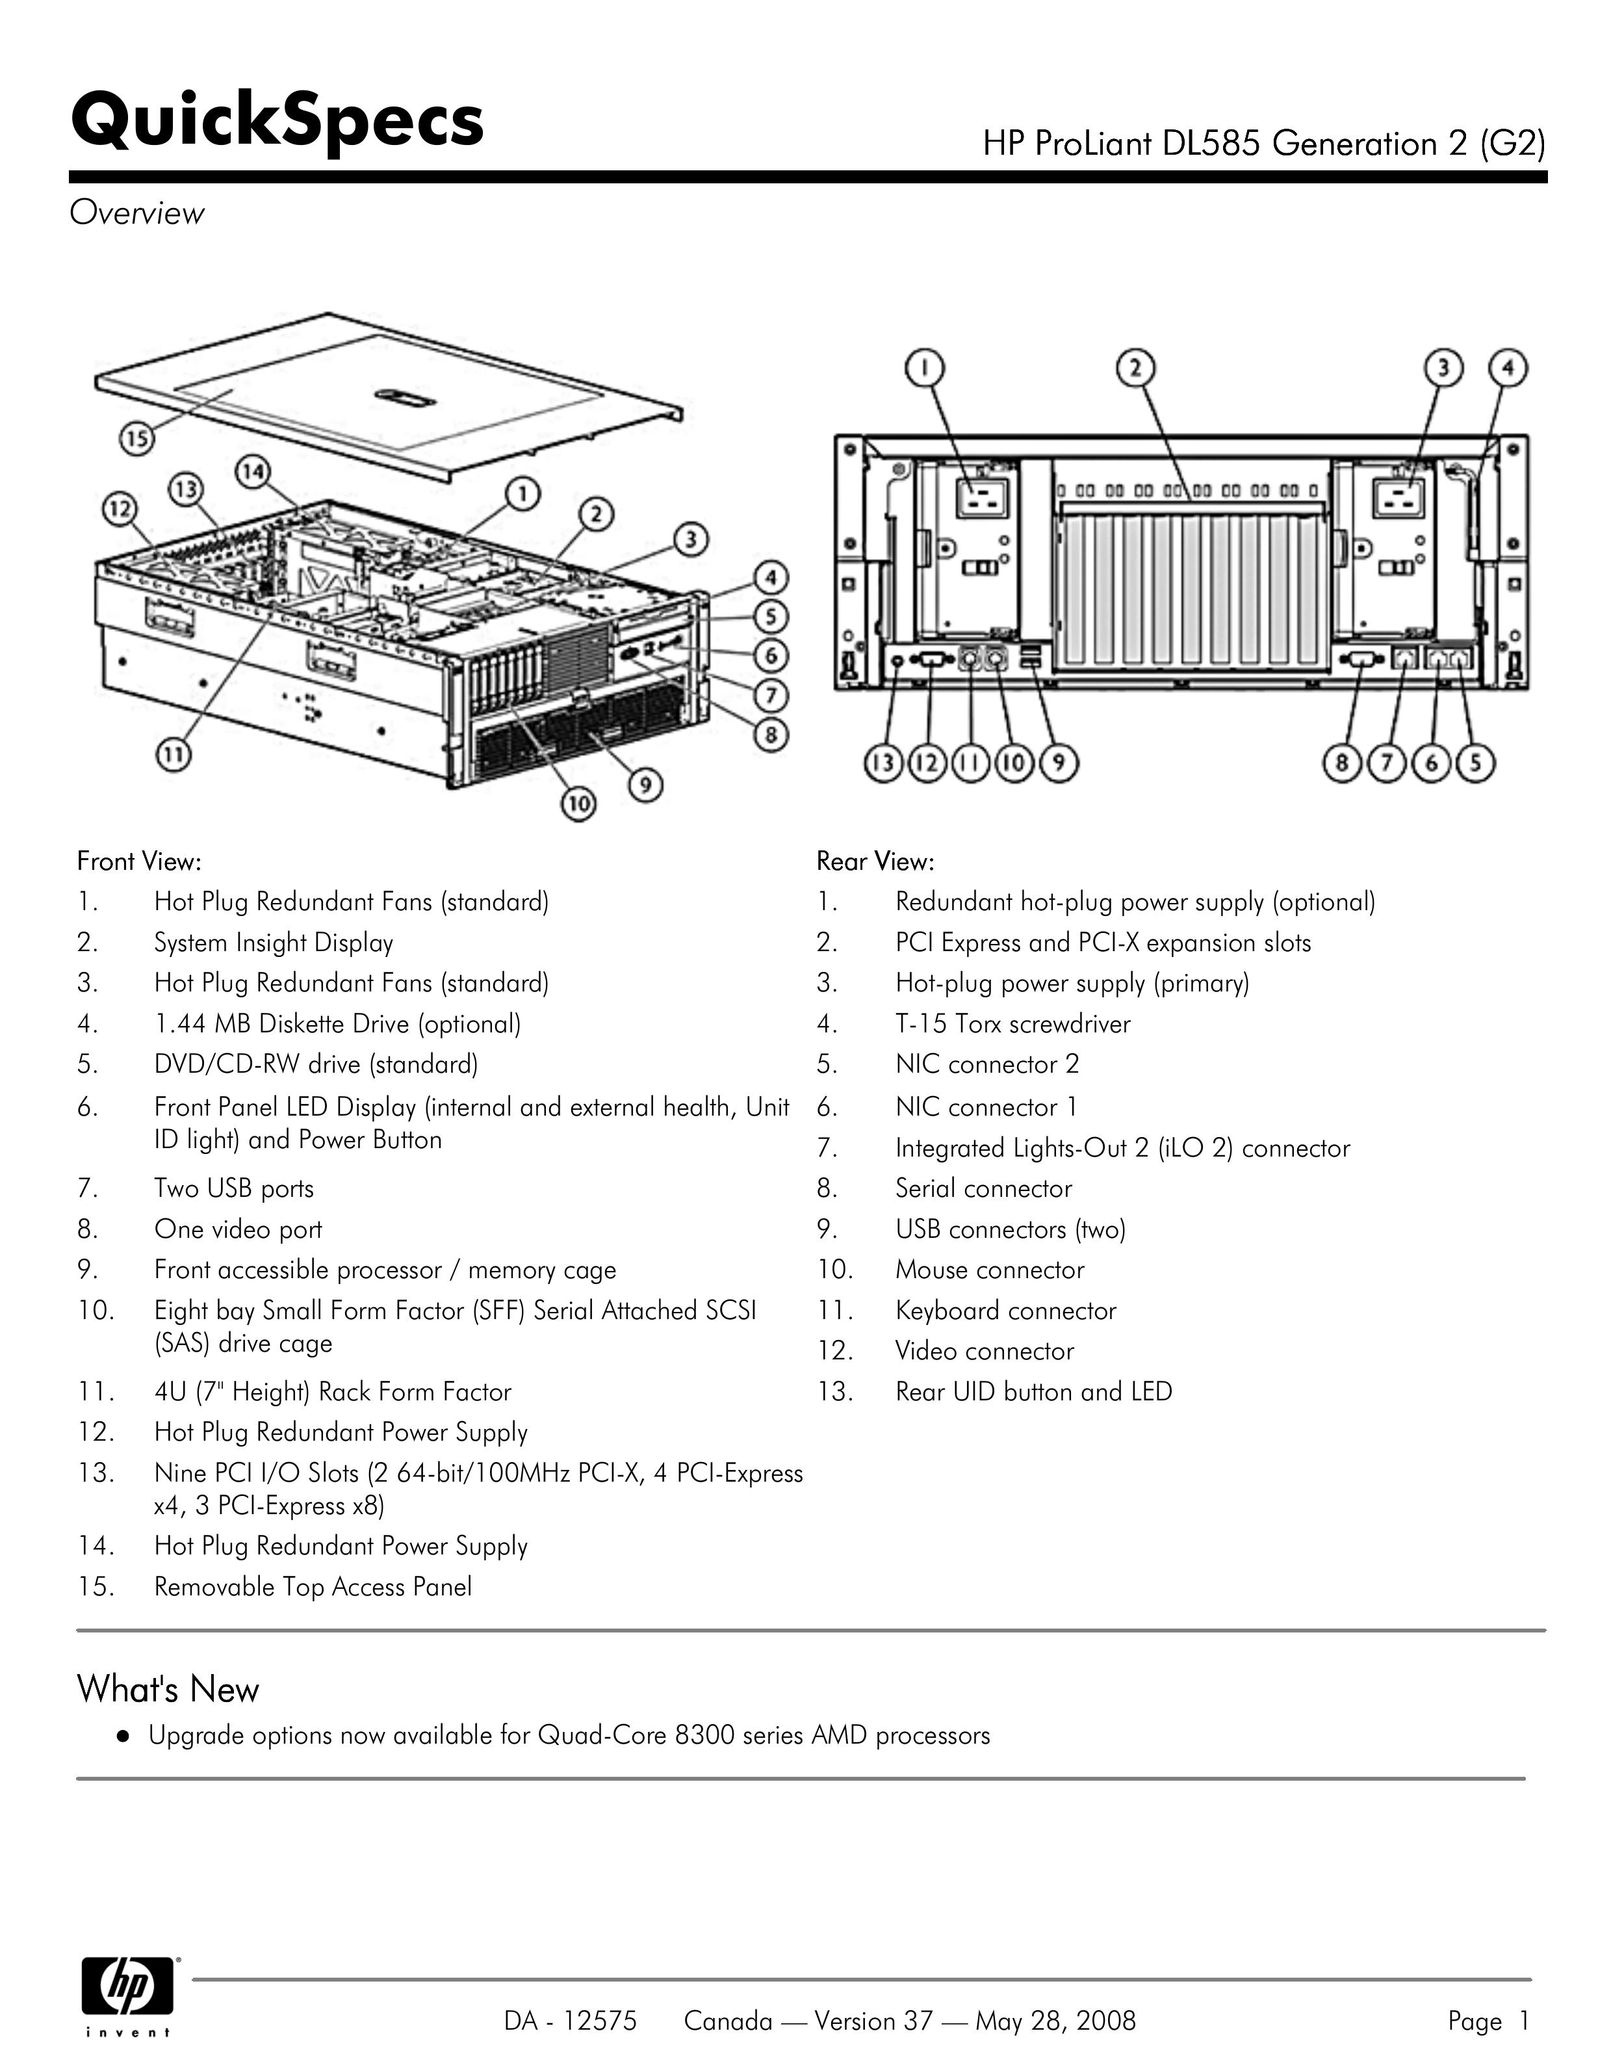 Compaq DL585 G2 Server User Manual